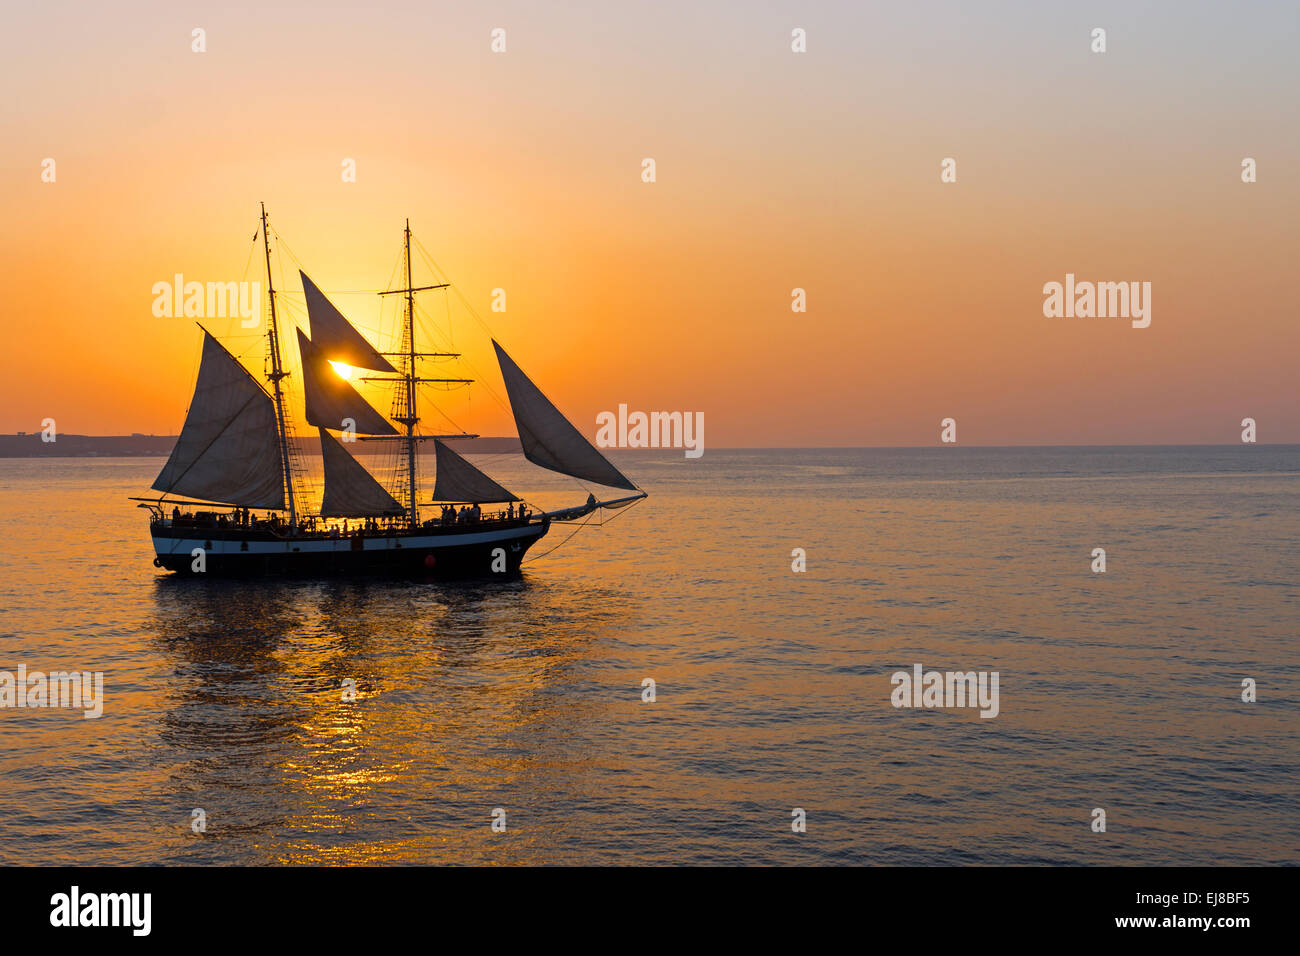 Romantic sunset with sailing ship Stock Photo